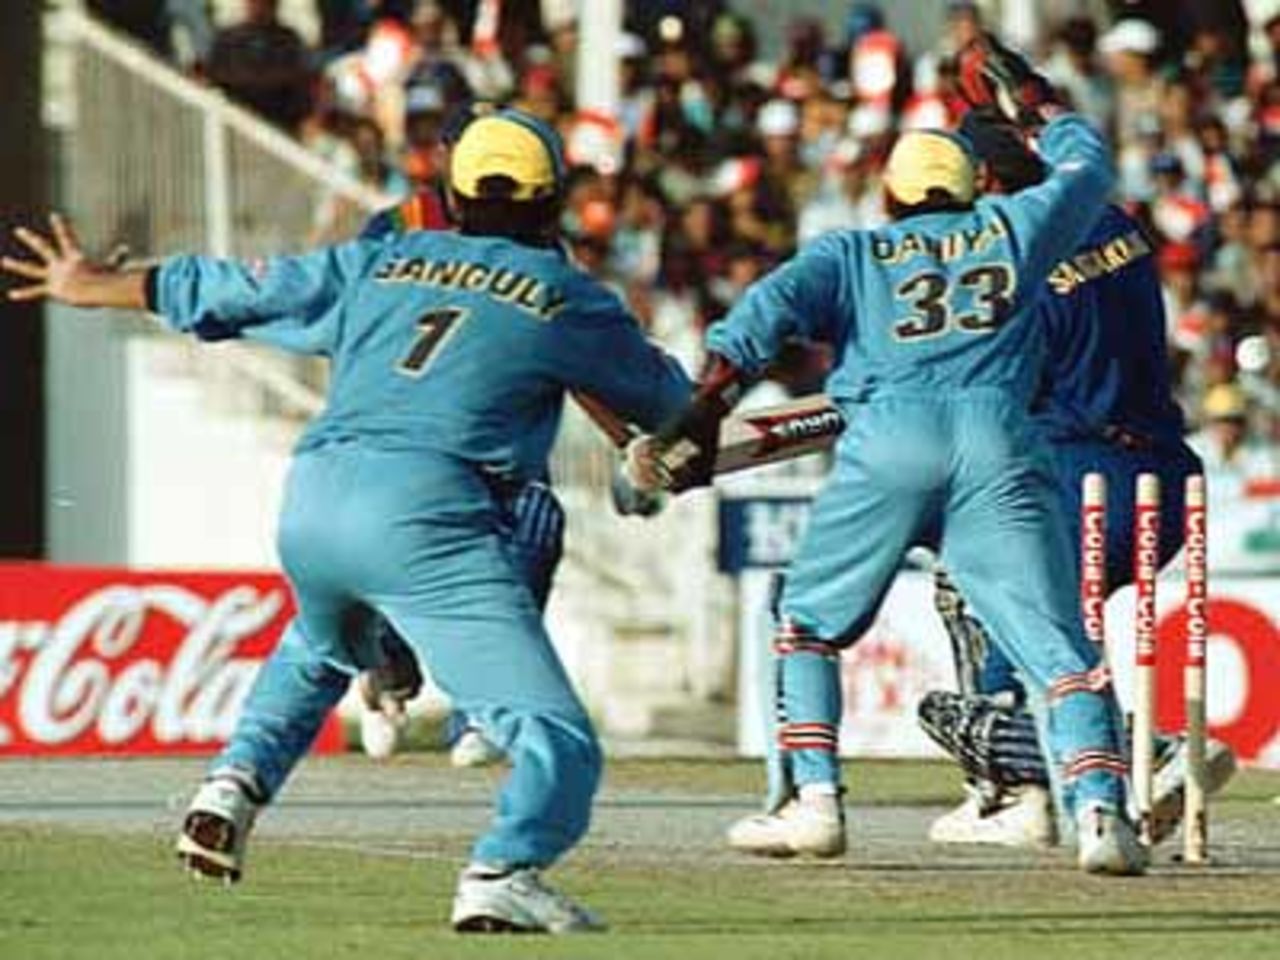 Dahiya and Ganguly jump in joy as Sangakkara plays on, Coca-Cola Champions Trophy, 2000/01, Final, India v Sri Lanka, Sharjah C.A. Stadium, 29 October 2000.